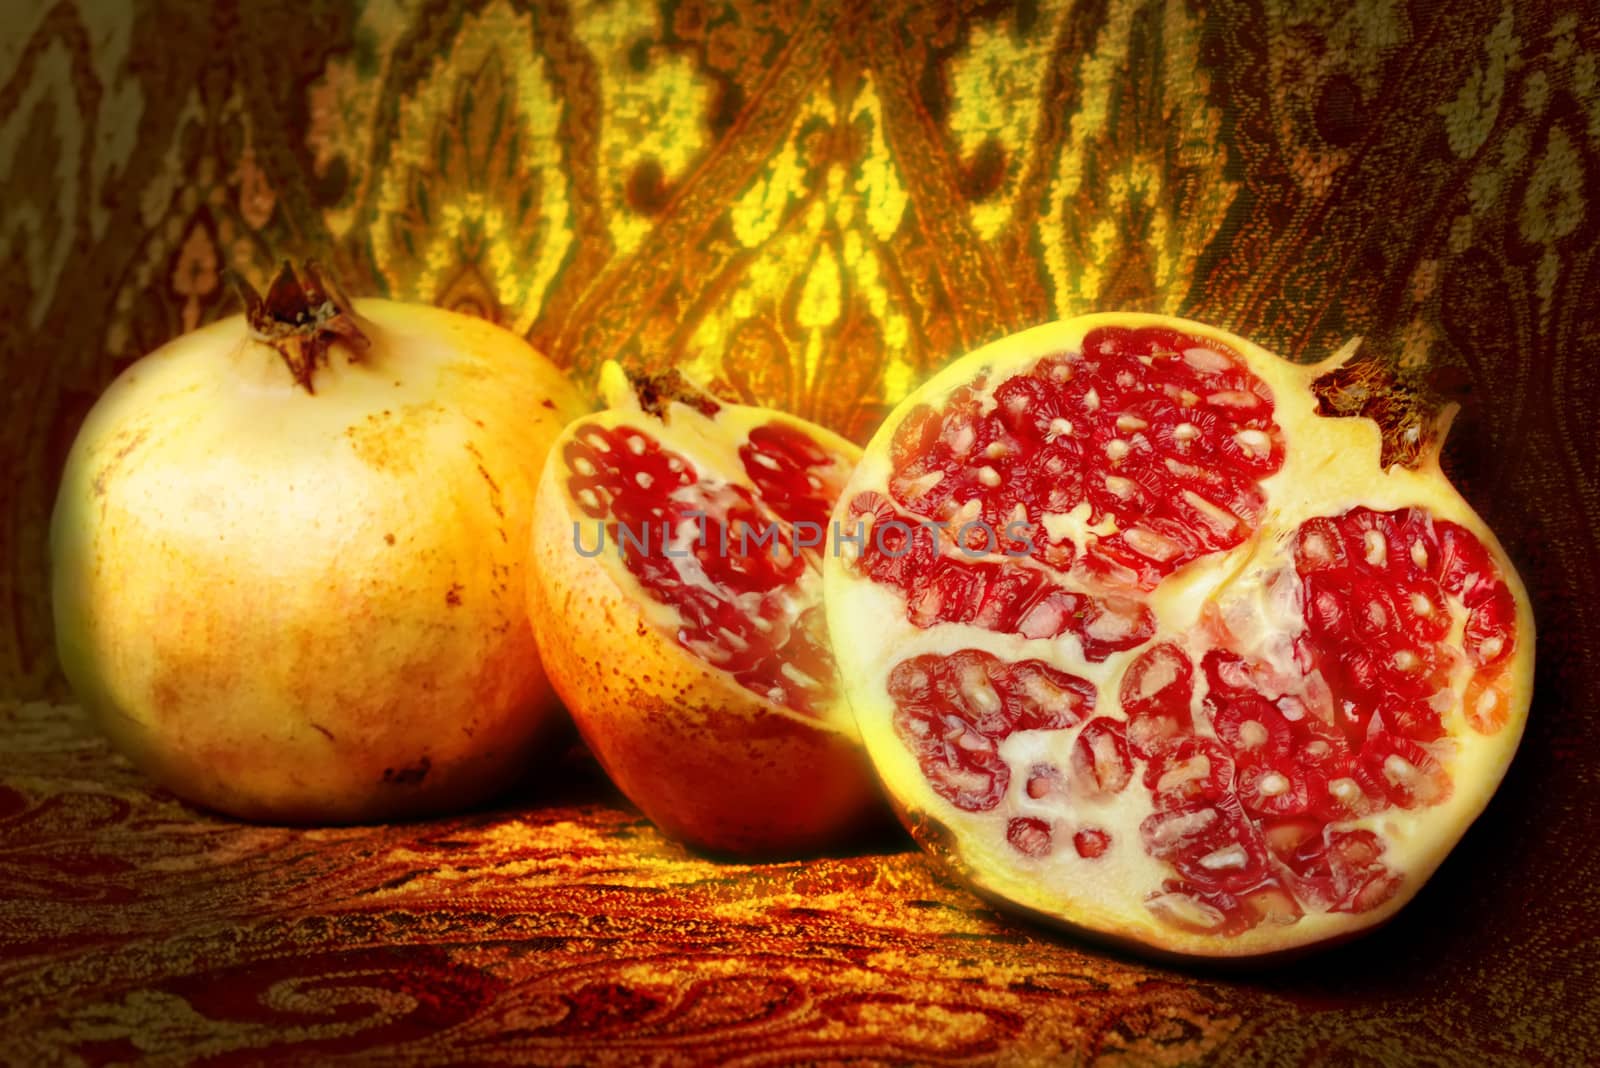  pomegranate still life by Carche